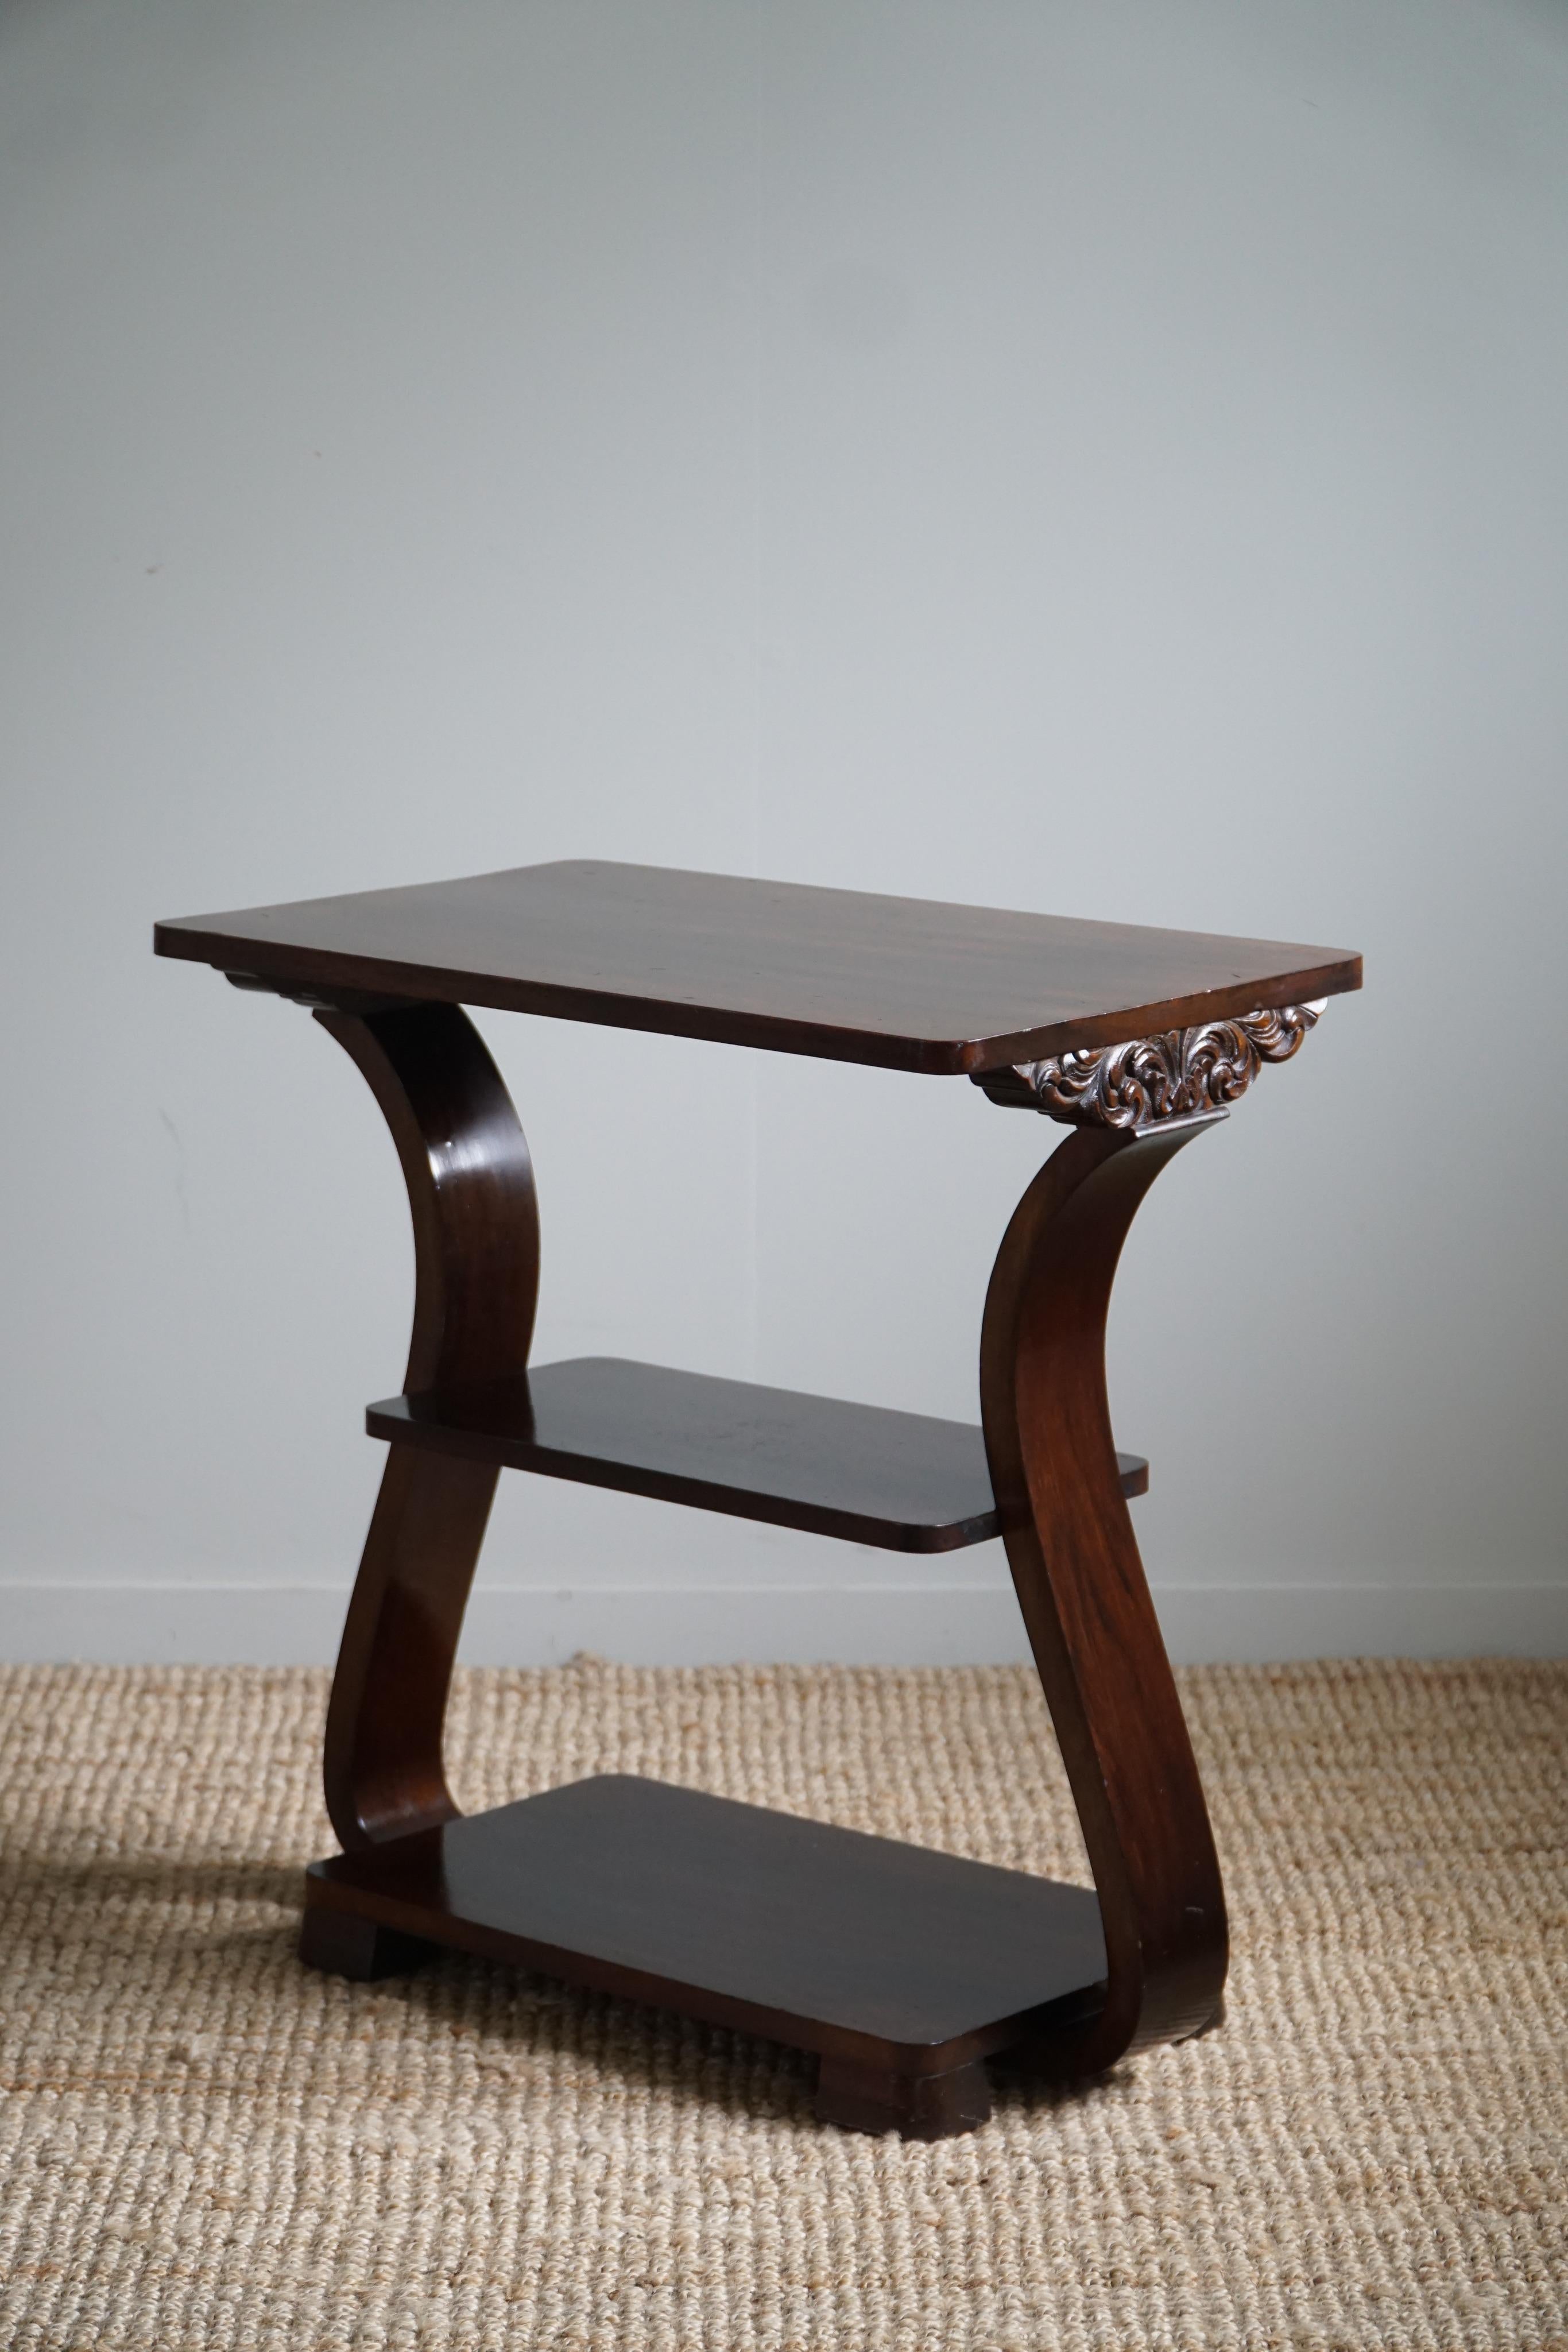 Danish Art Nouveau Side Table / Pedestal in Walnut, Early 20th Century For Sale 3